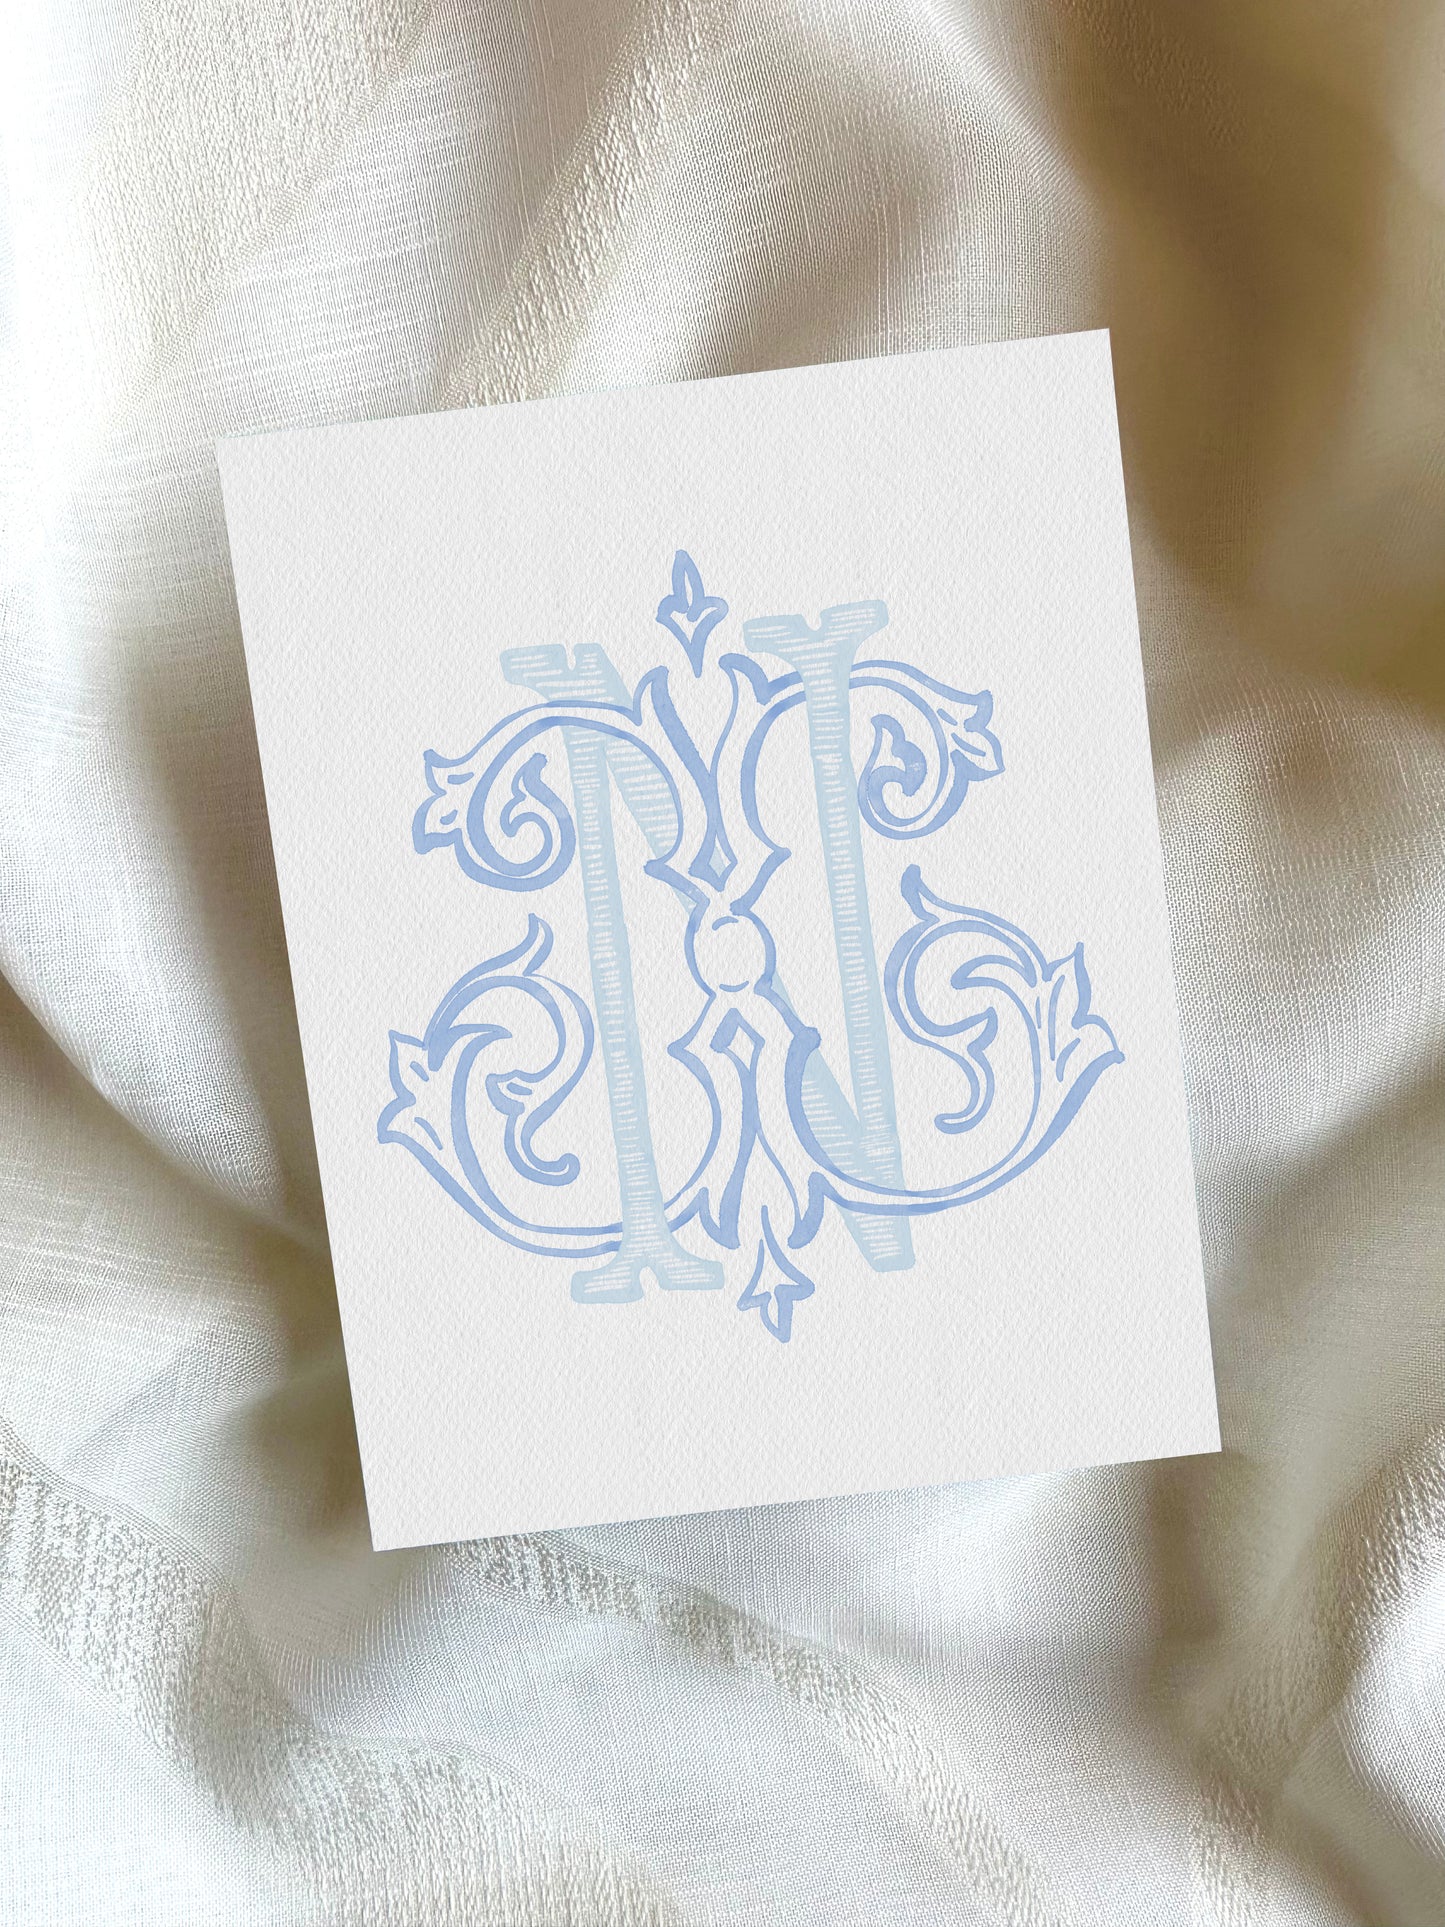 2 Letter Monogram with Letters NX XN | Digital Download - Wedding Monogram SVG, Personal Logo, Wedding Logo for Wedding Invitations The Wedding Crest Lab